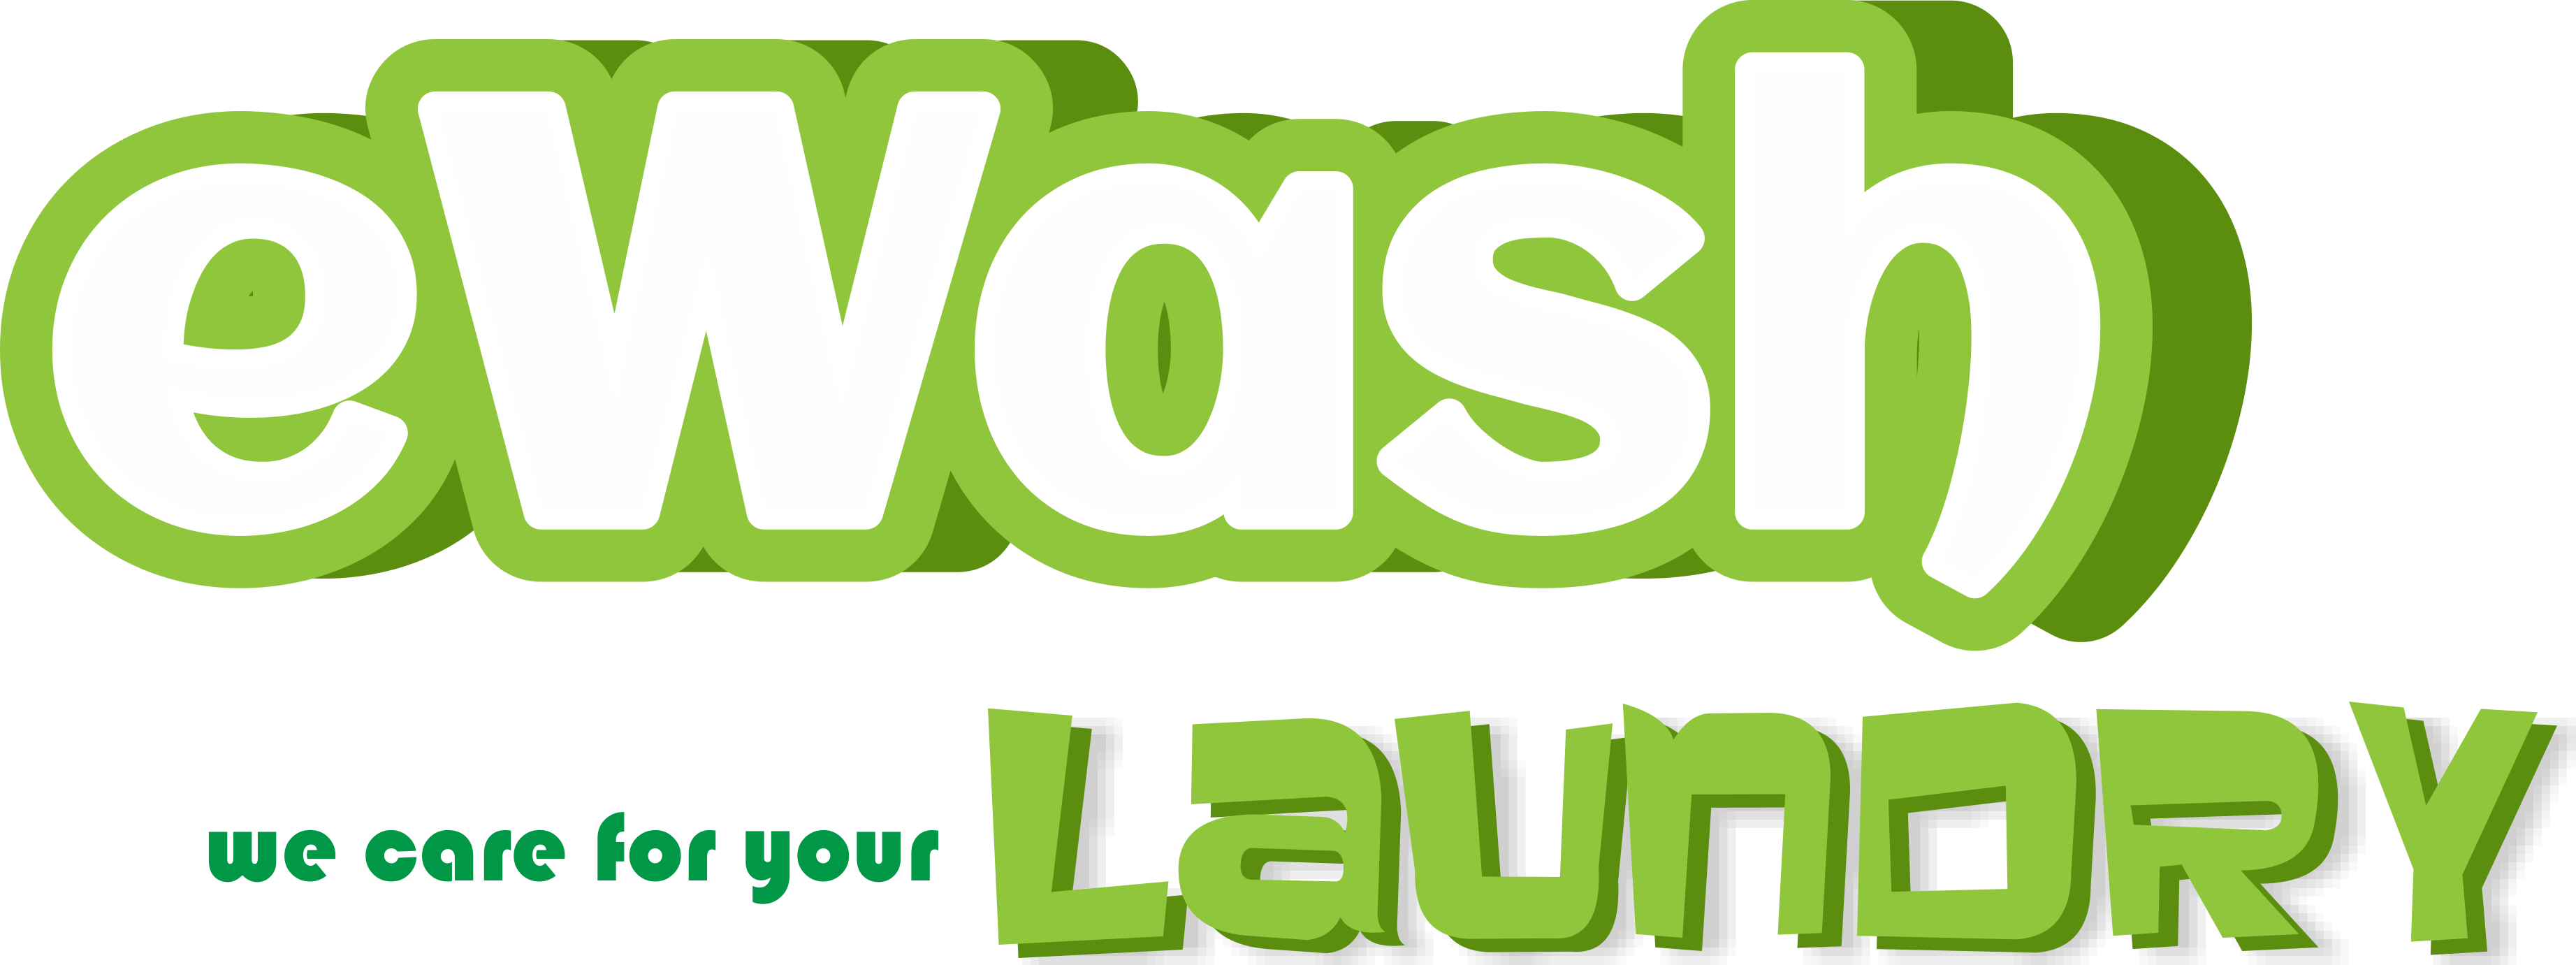 eWash Logo